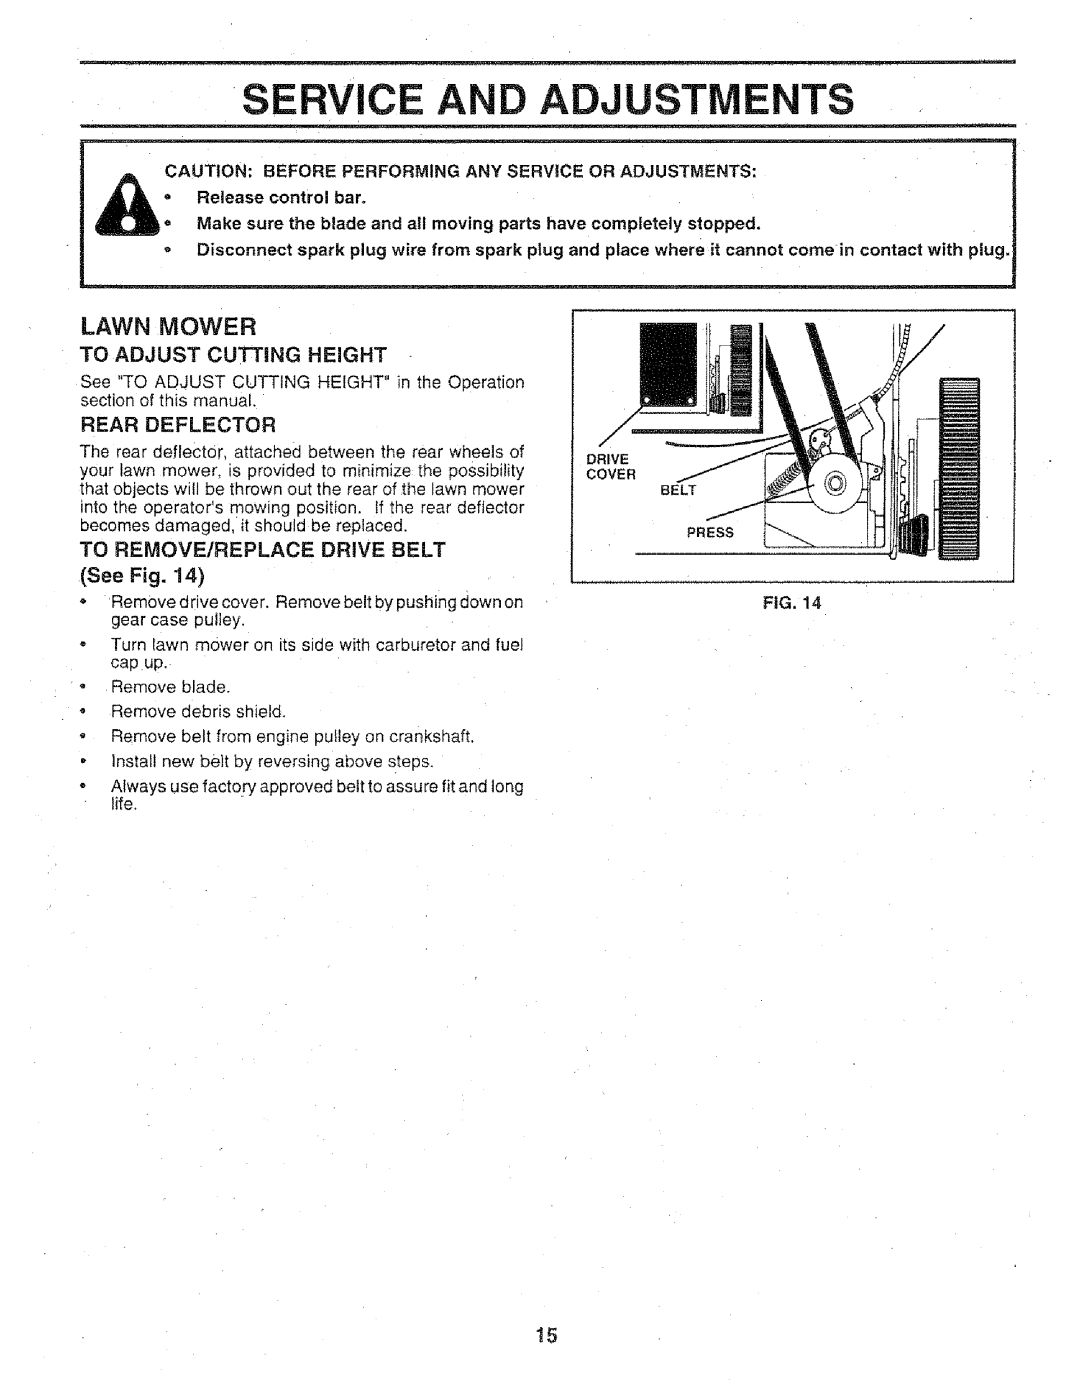 Craftsman 917.3773 Rvice And Adju Ents, To Adjust Cutting Height, Rear Deflector, Release control bar, Lawn Mower, FiG 